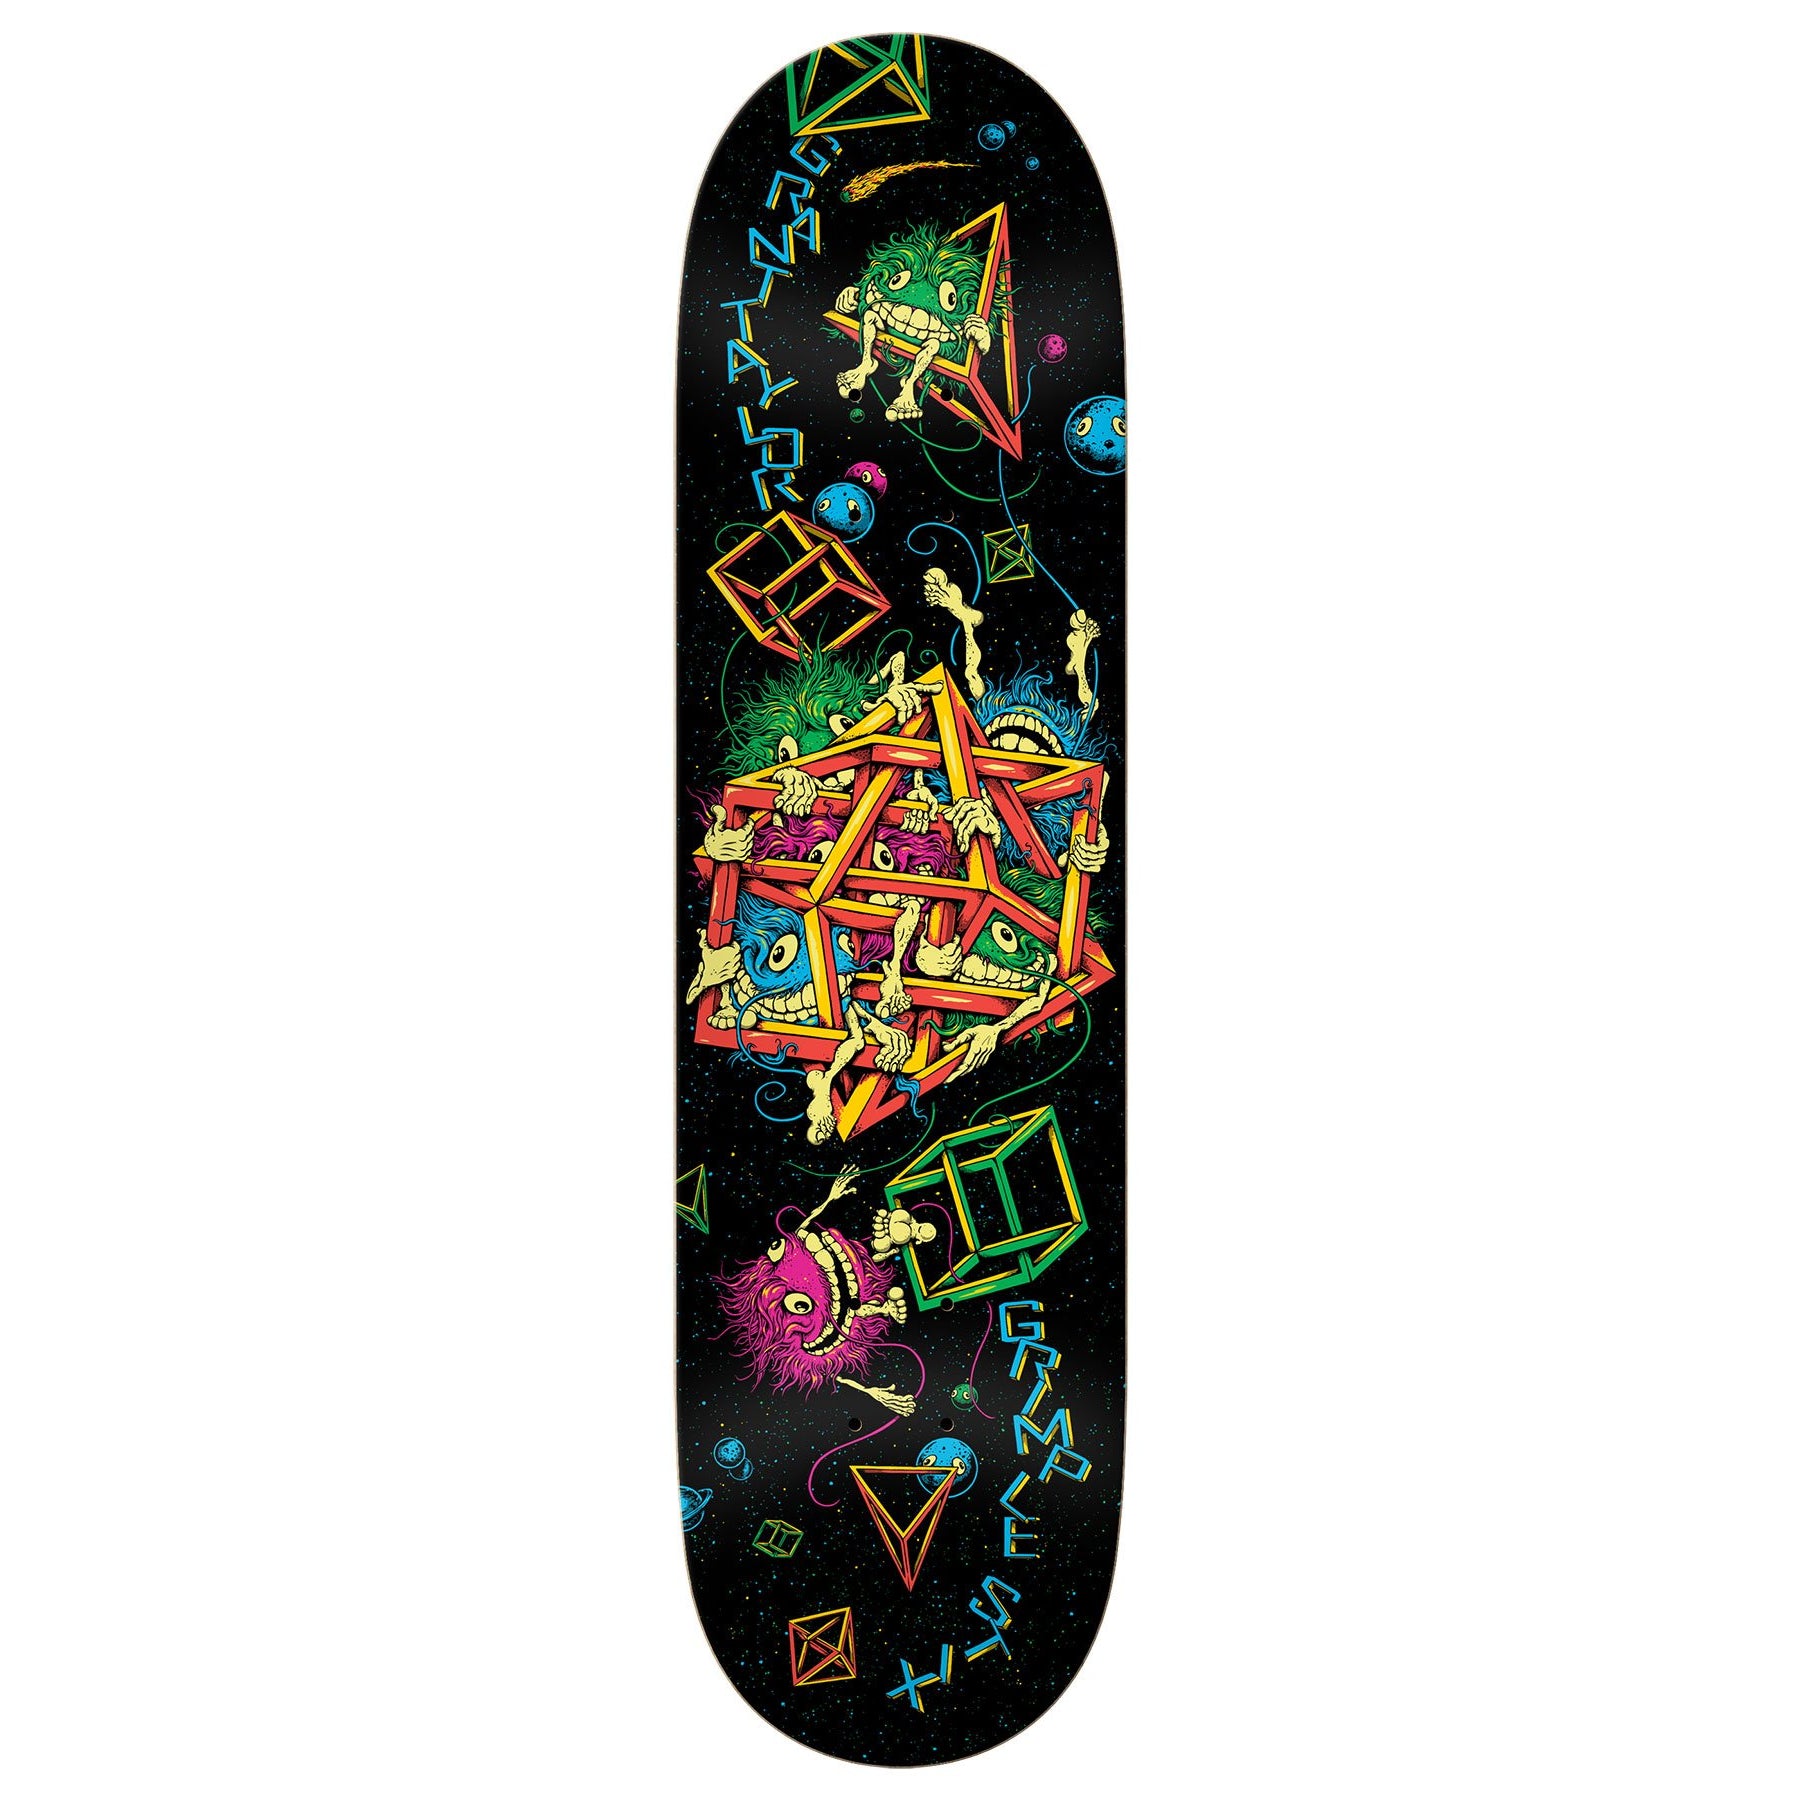 8.5" Grant Taylor Grimplestix AntiHero Skateboard Deck